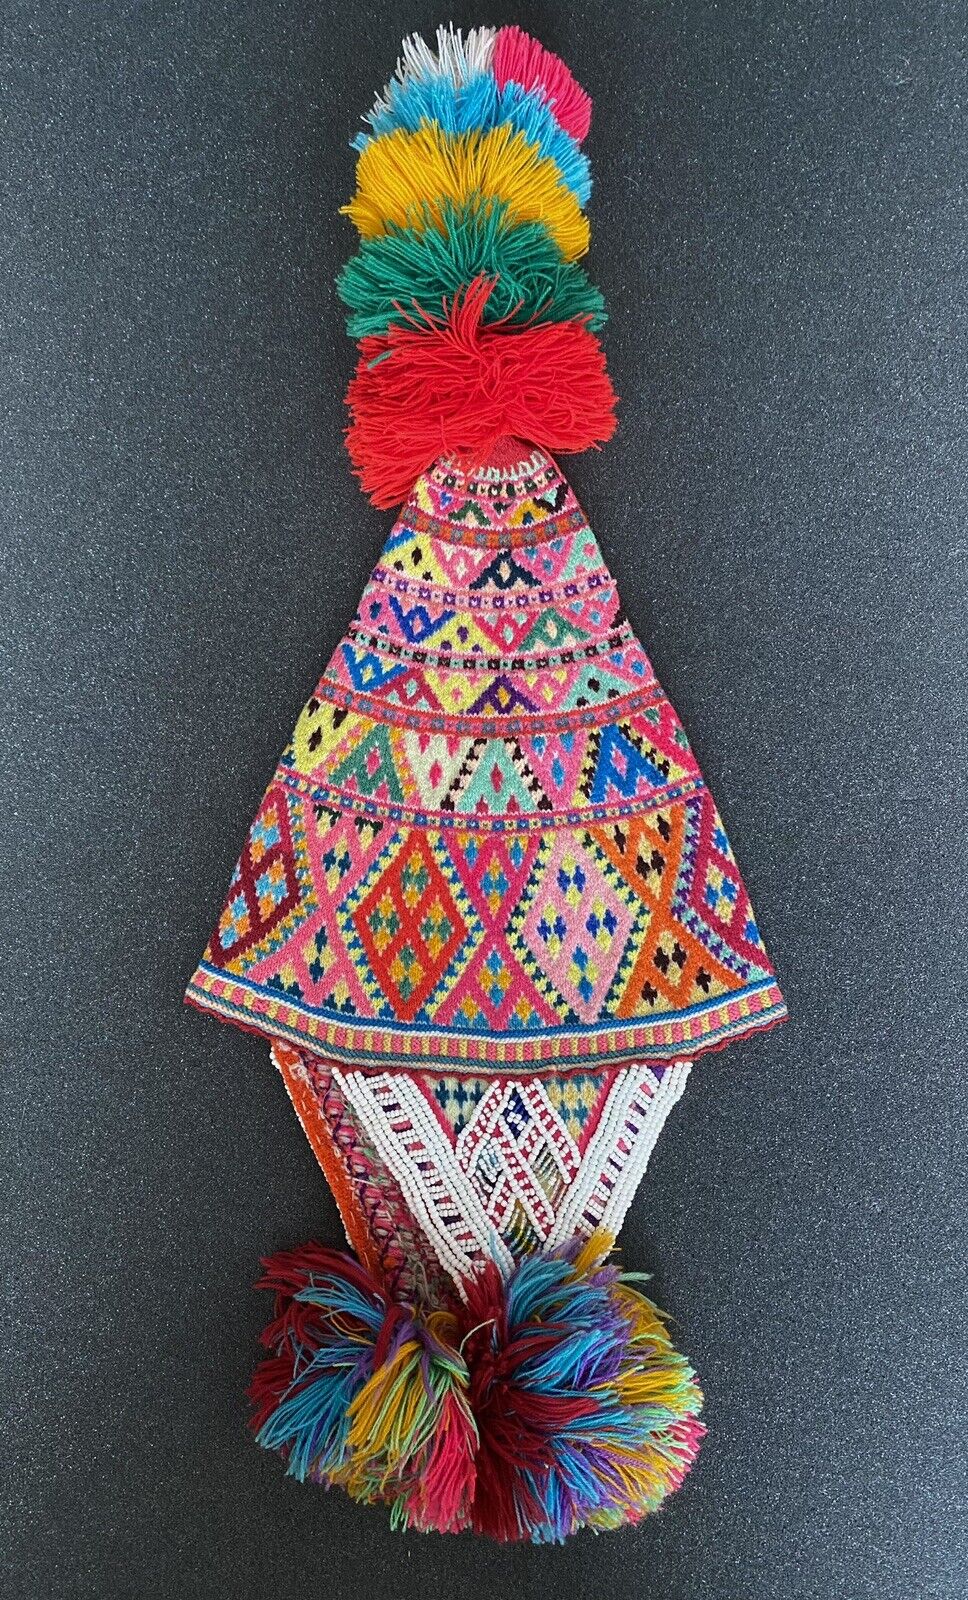 Antique Q’ero Peruvian Ceremonial Shaman Chullo Hat Andean Textile #4 *More fine